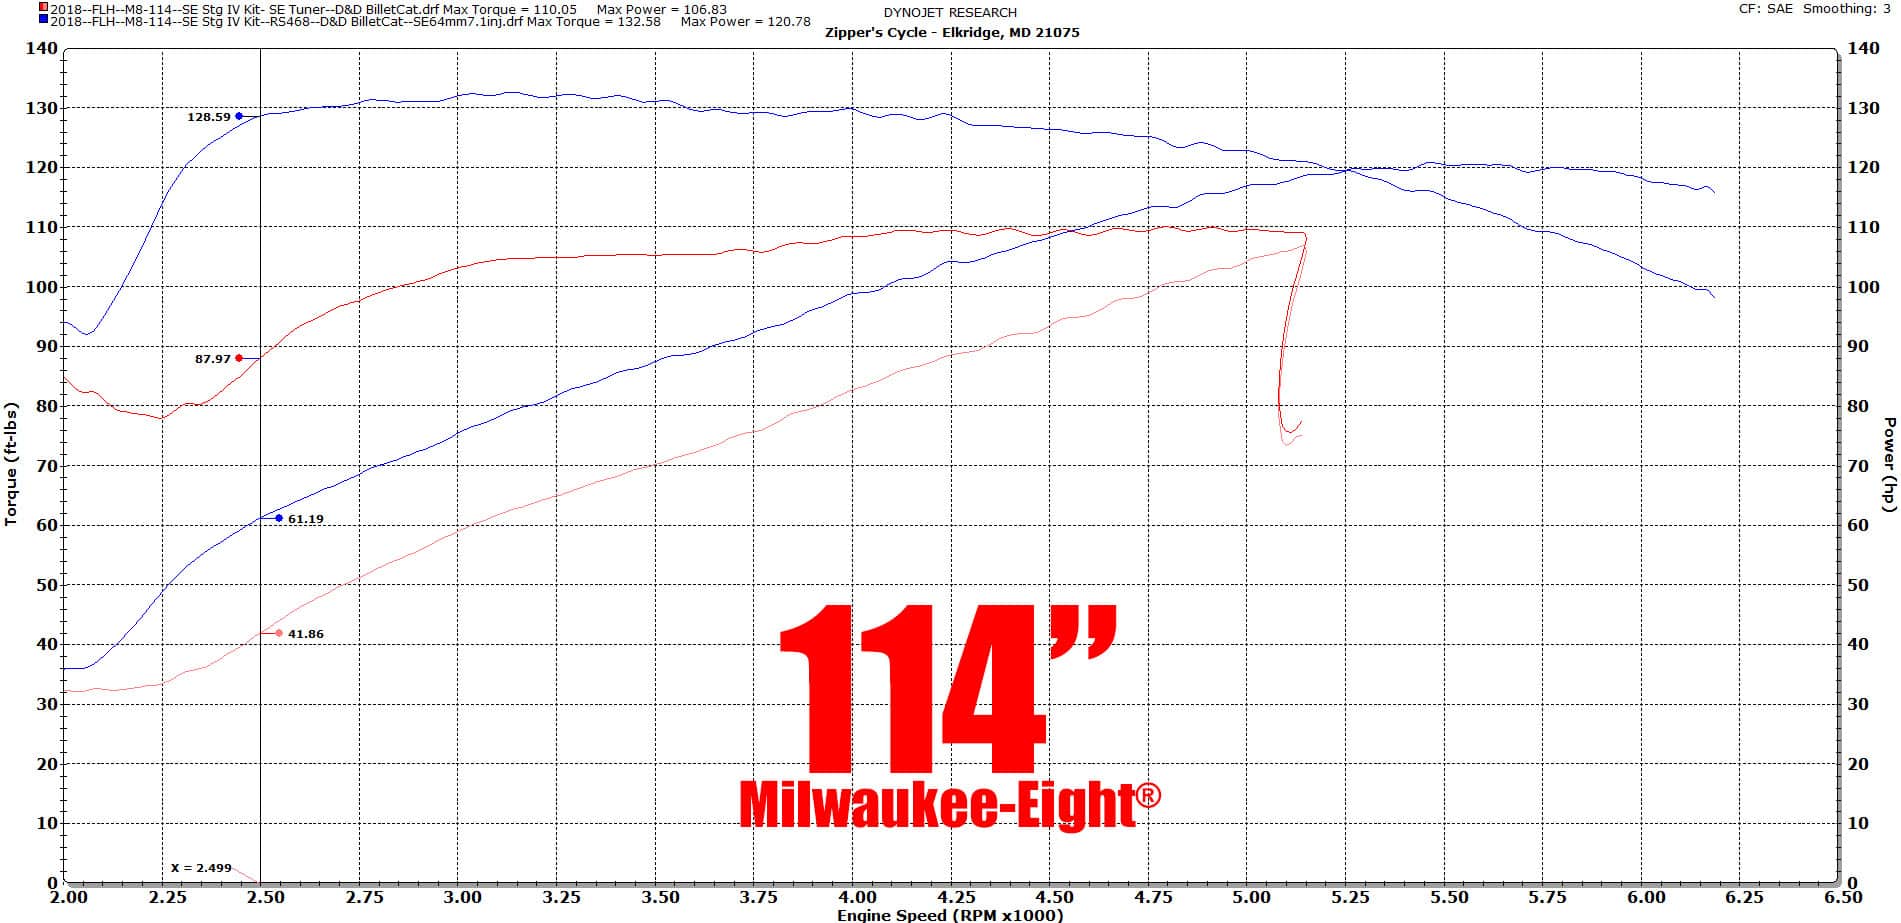 Milwaukee-Eight Engine Stage IV Kit - 114/117CI to 131CI